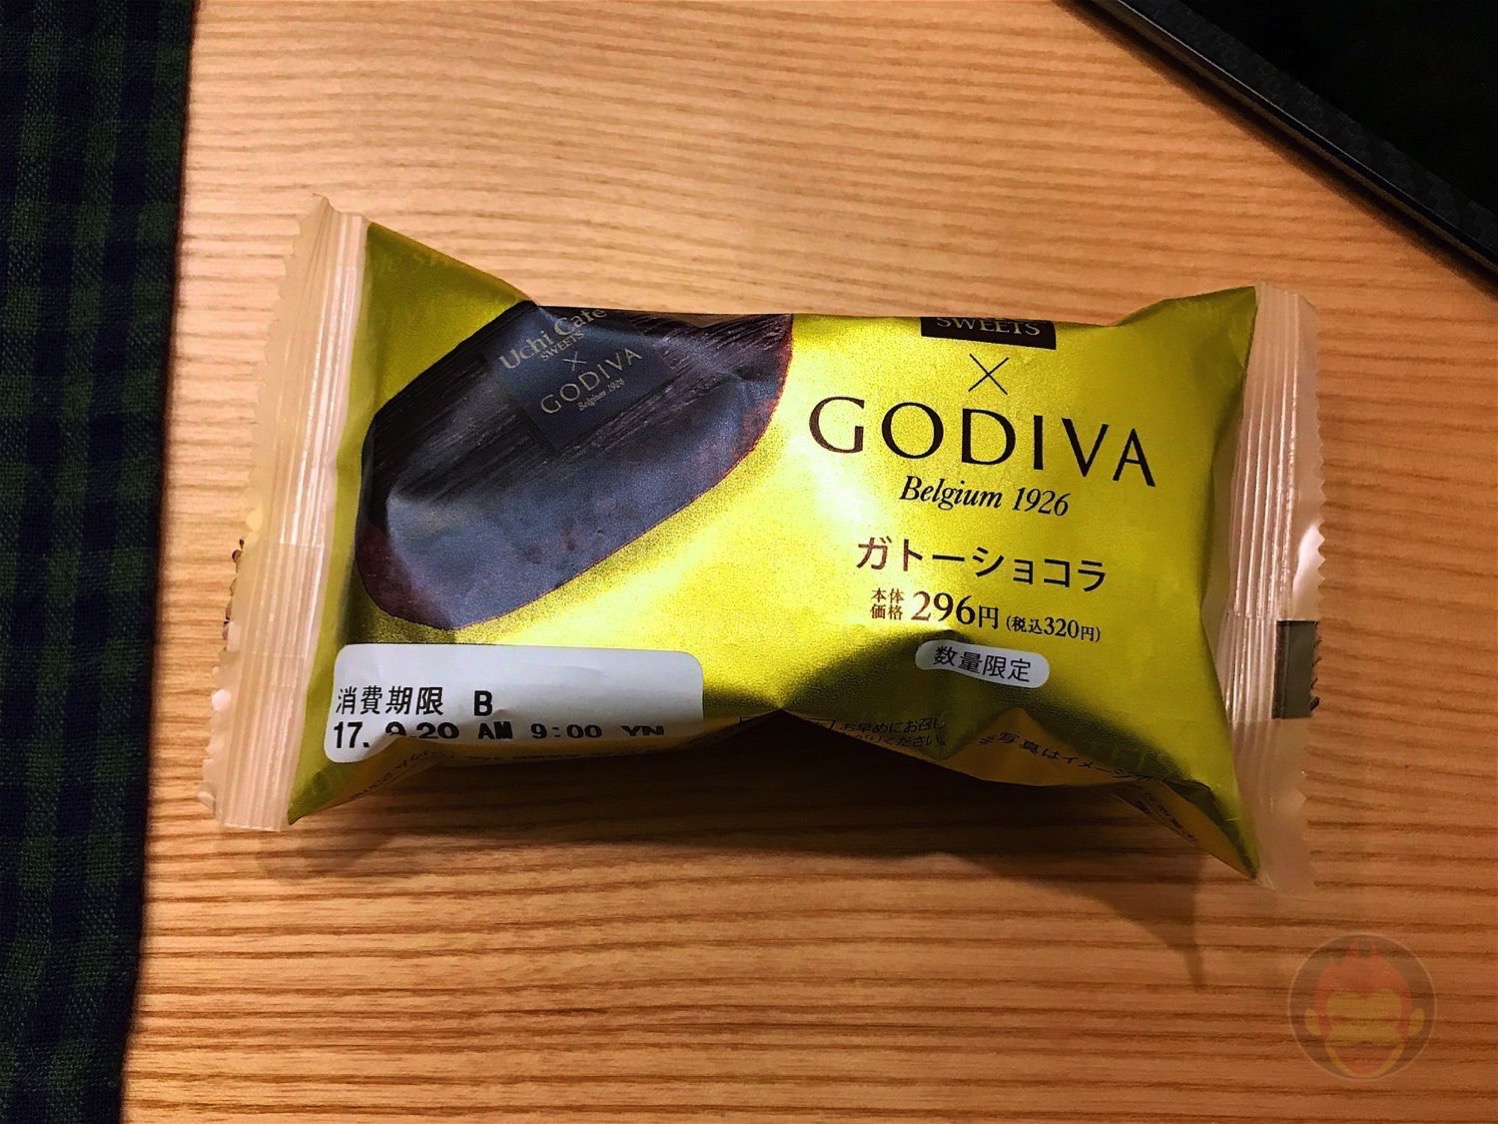 Lawson-Uchi-Cafe-Godiva-01.jpg